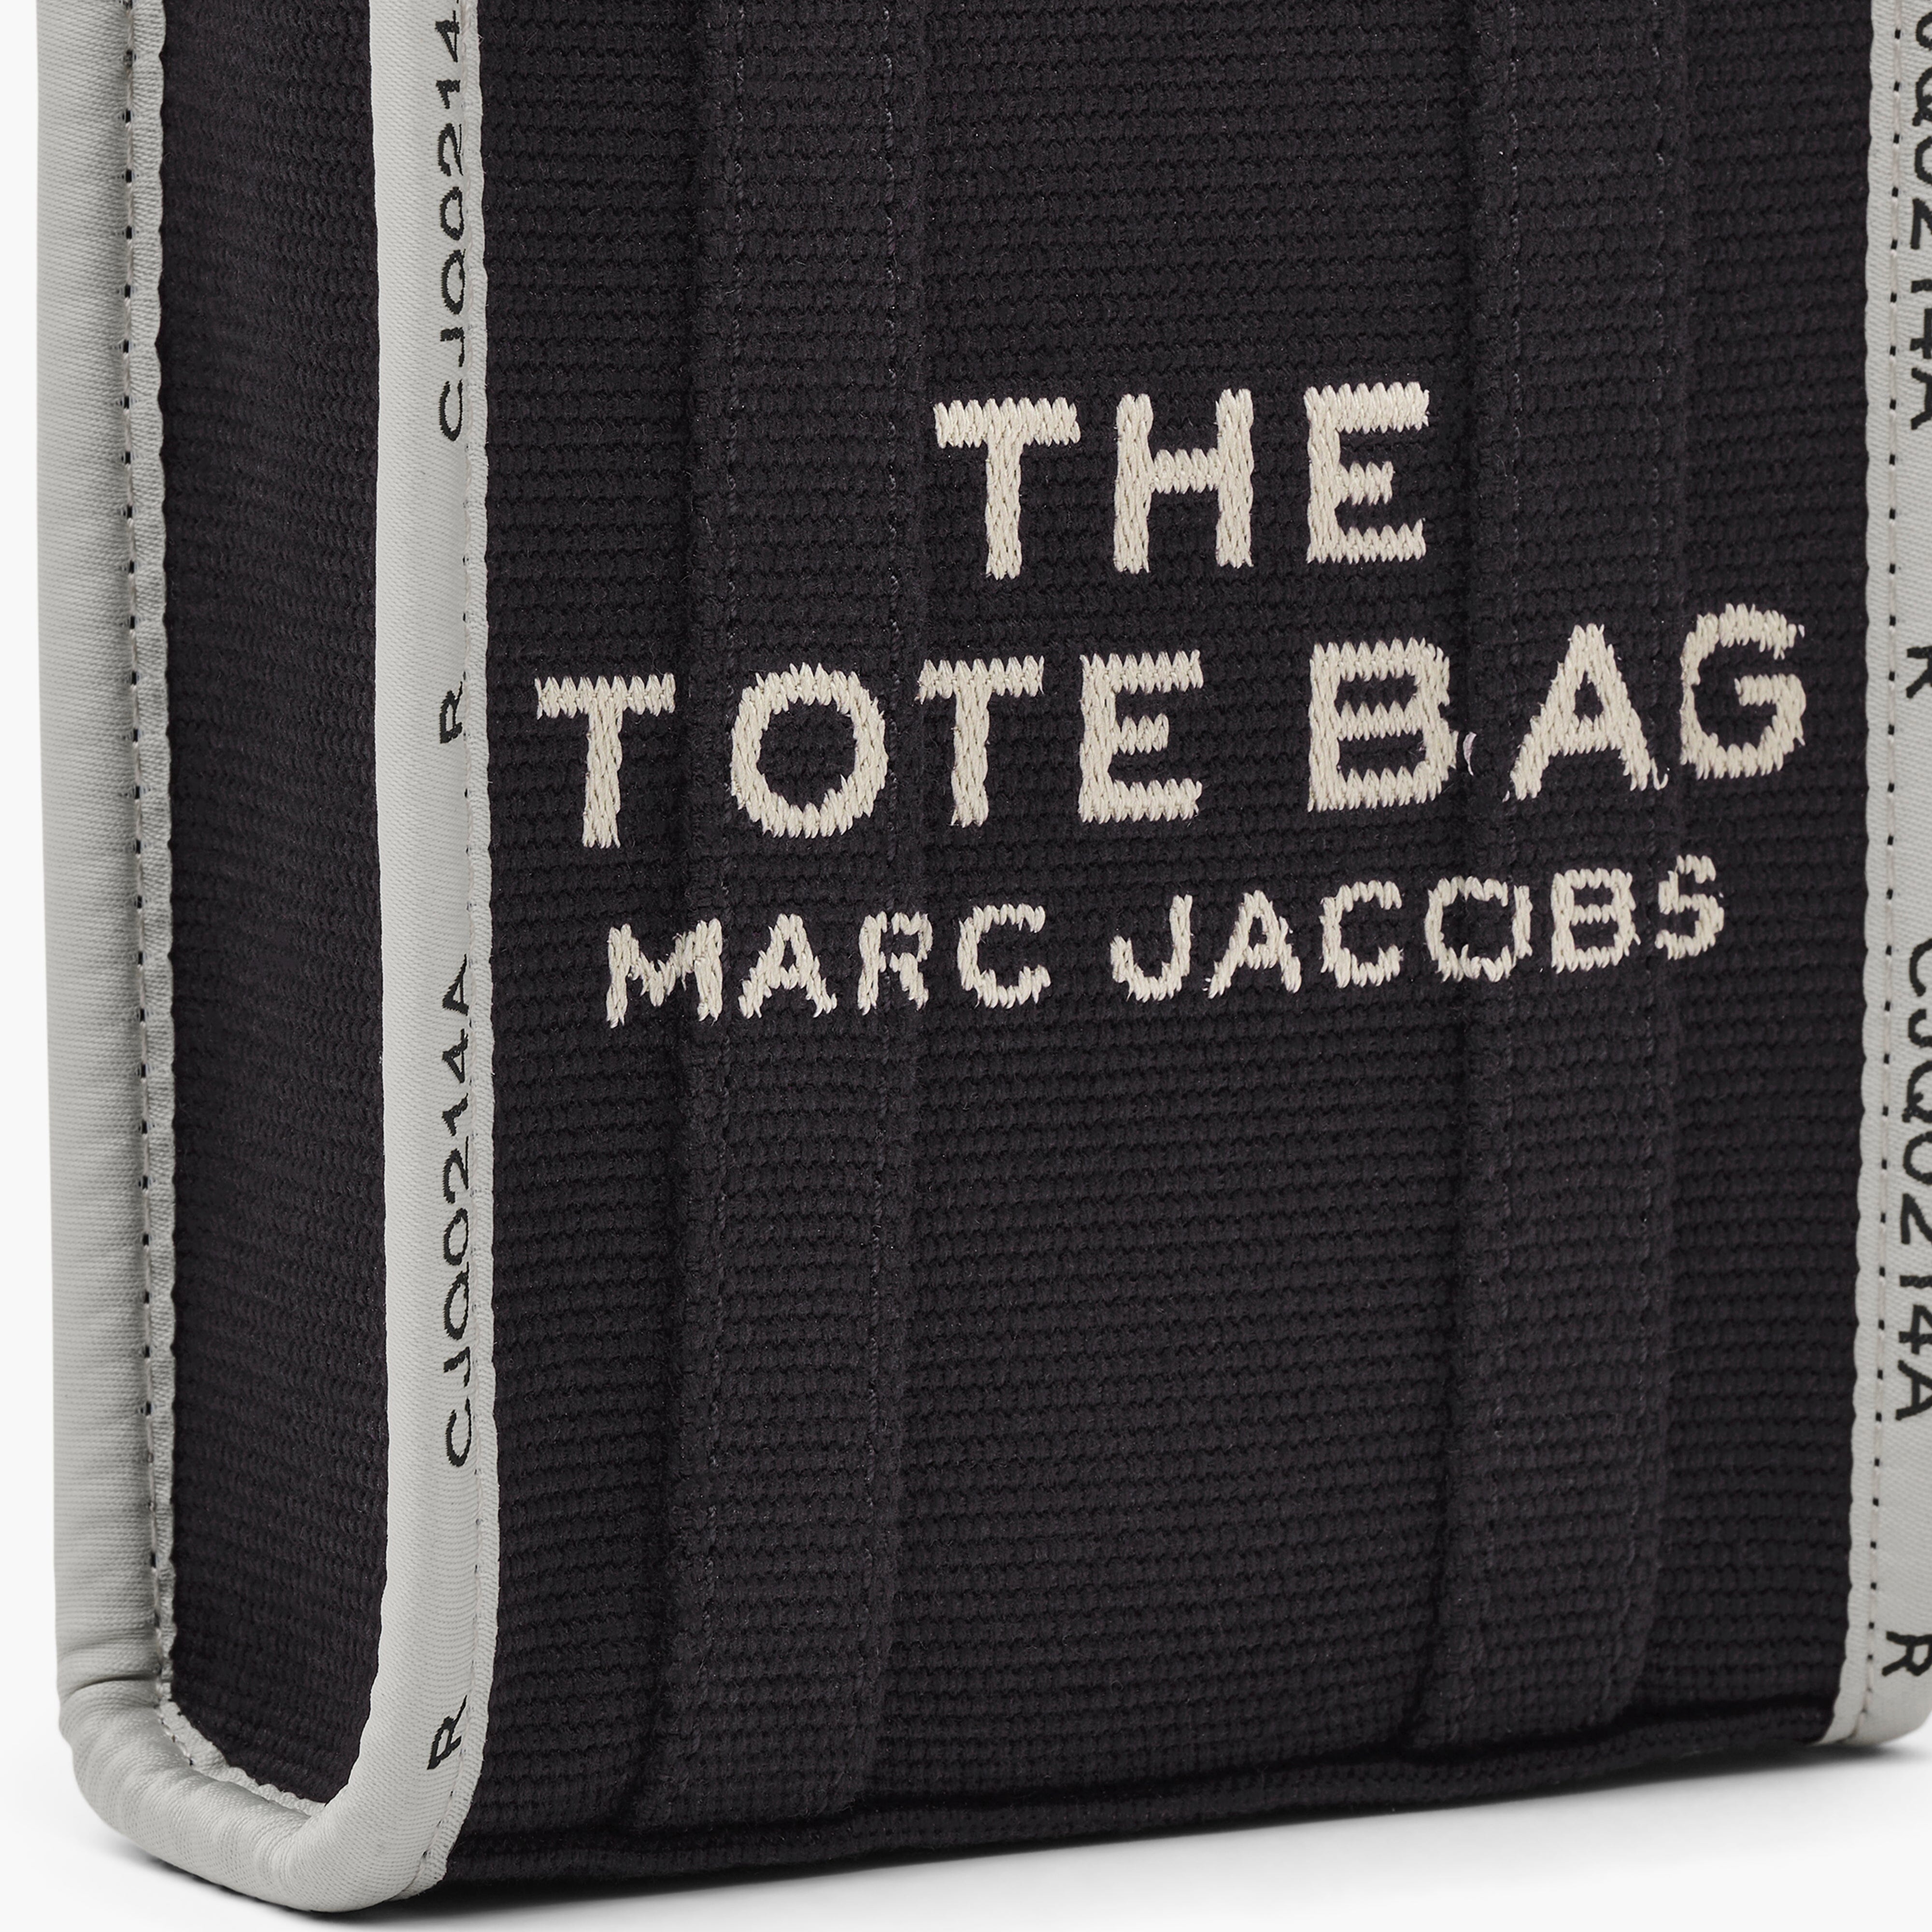 MARC JACOBS - The Phone Tote Bag - 2R3HCR027H01 - 001 - Nero Borse Marc Jacobs 